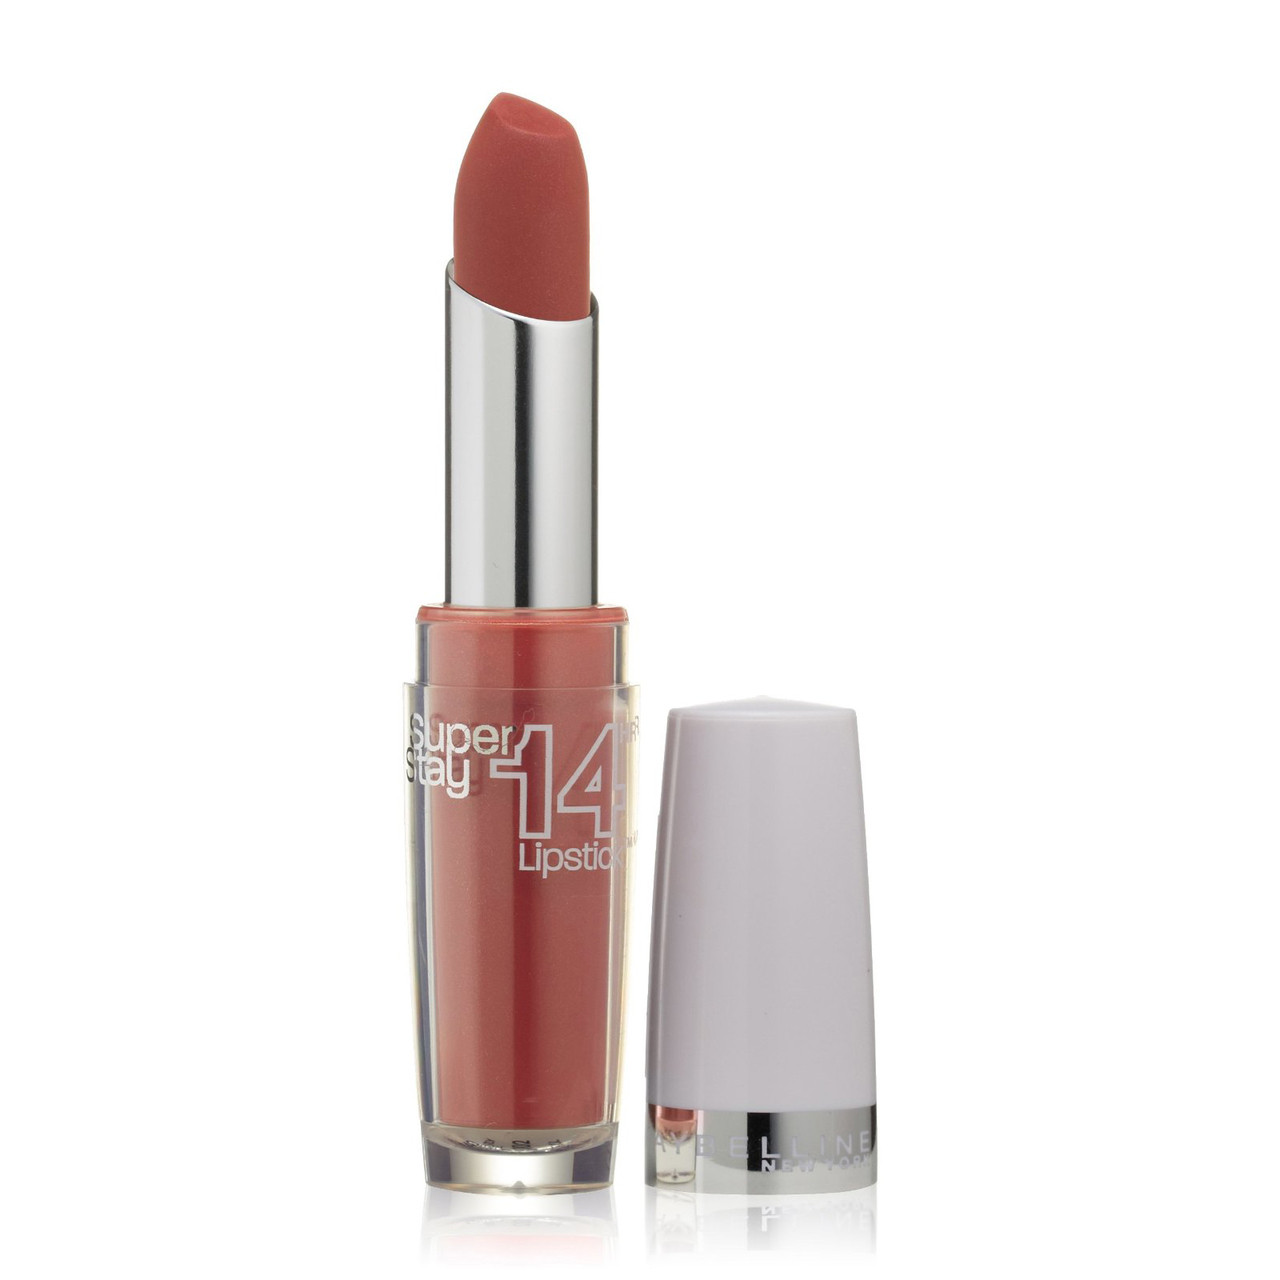 Maybelline New York Super Stay 14HR Lipstick - Lasting Chestnut (045) -  Hard To Find Beauty